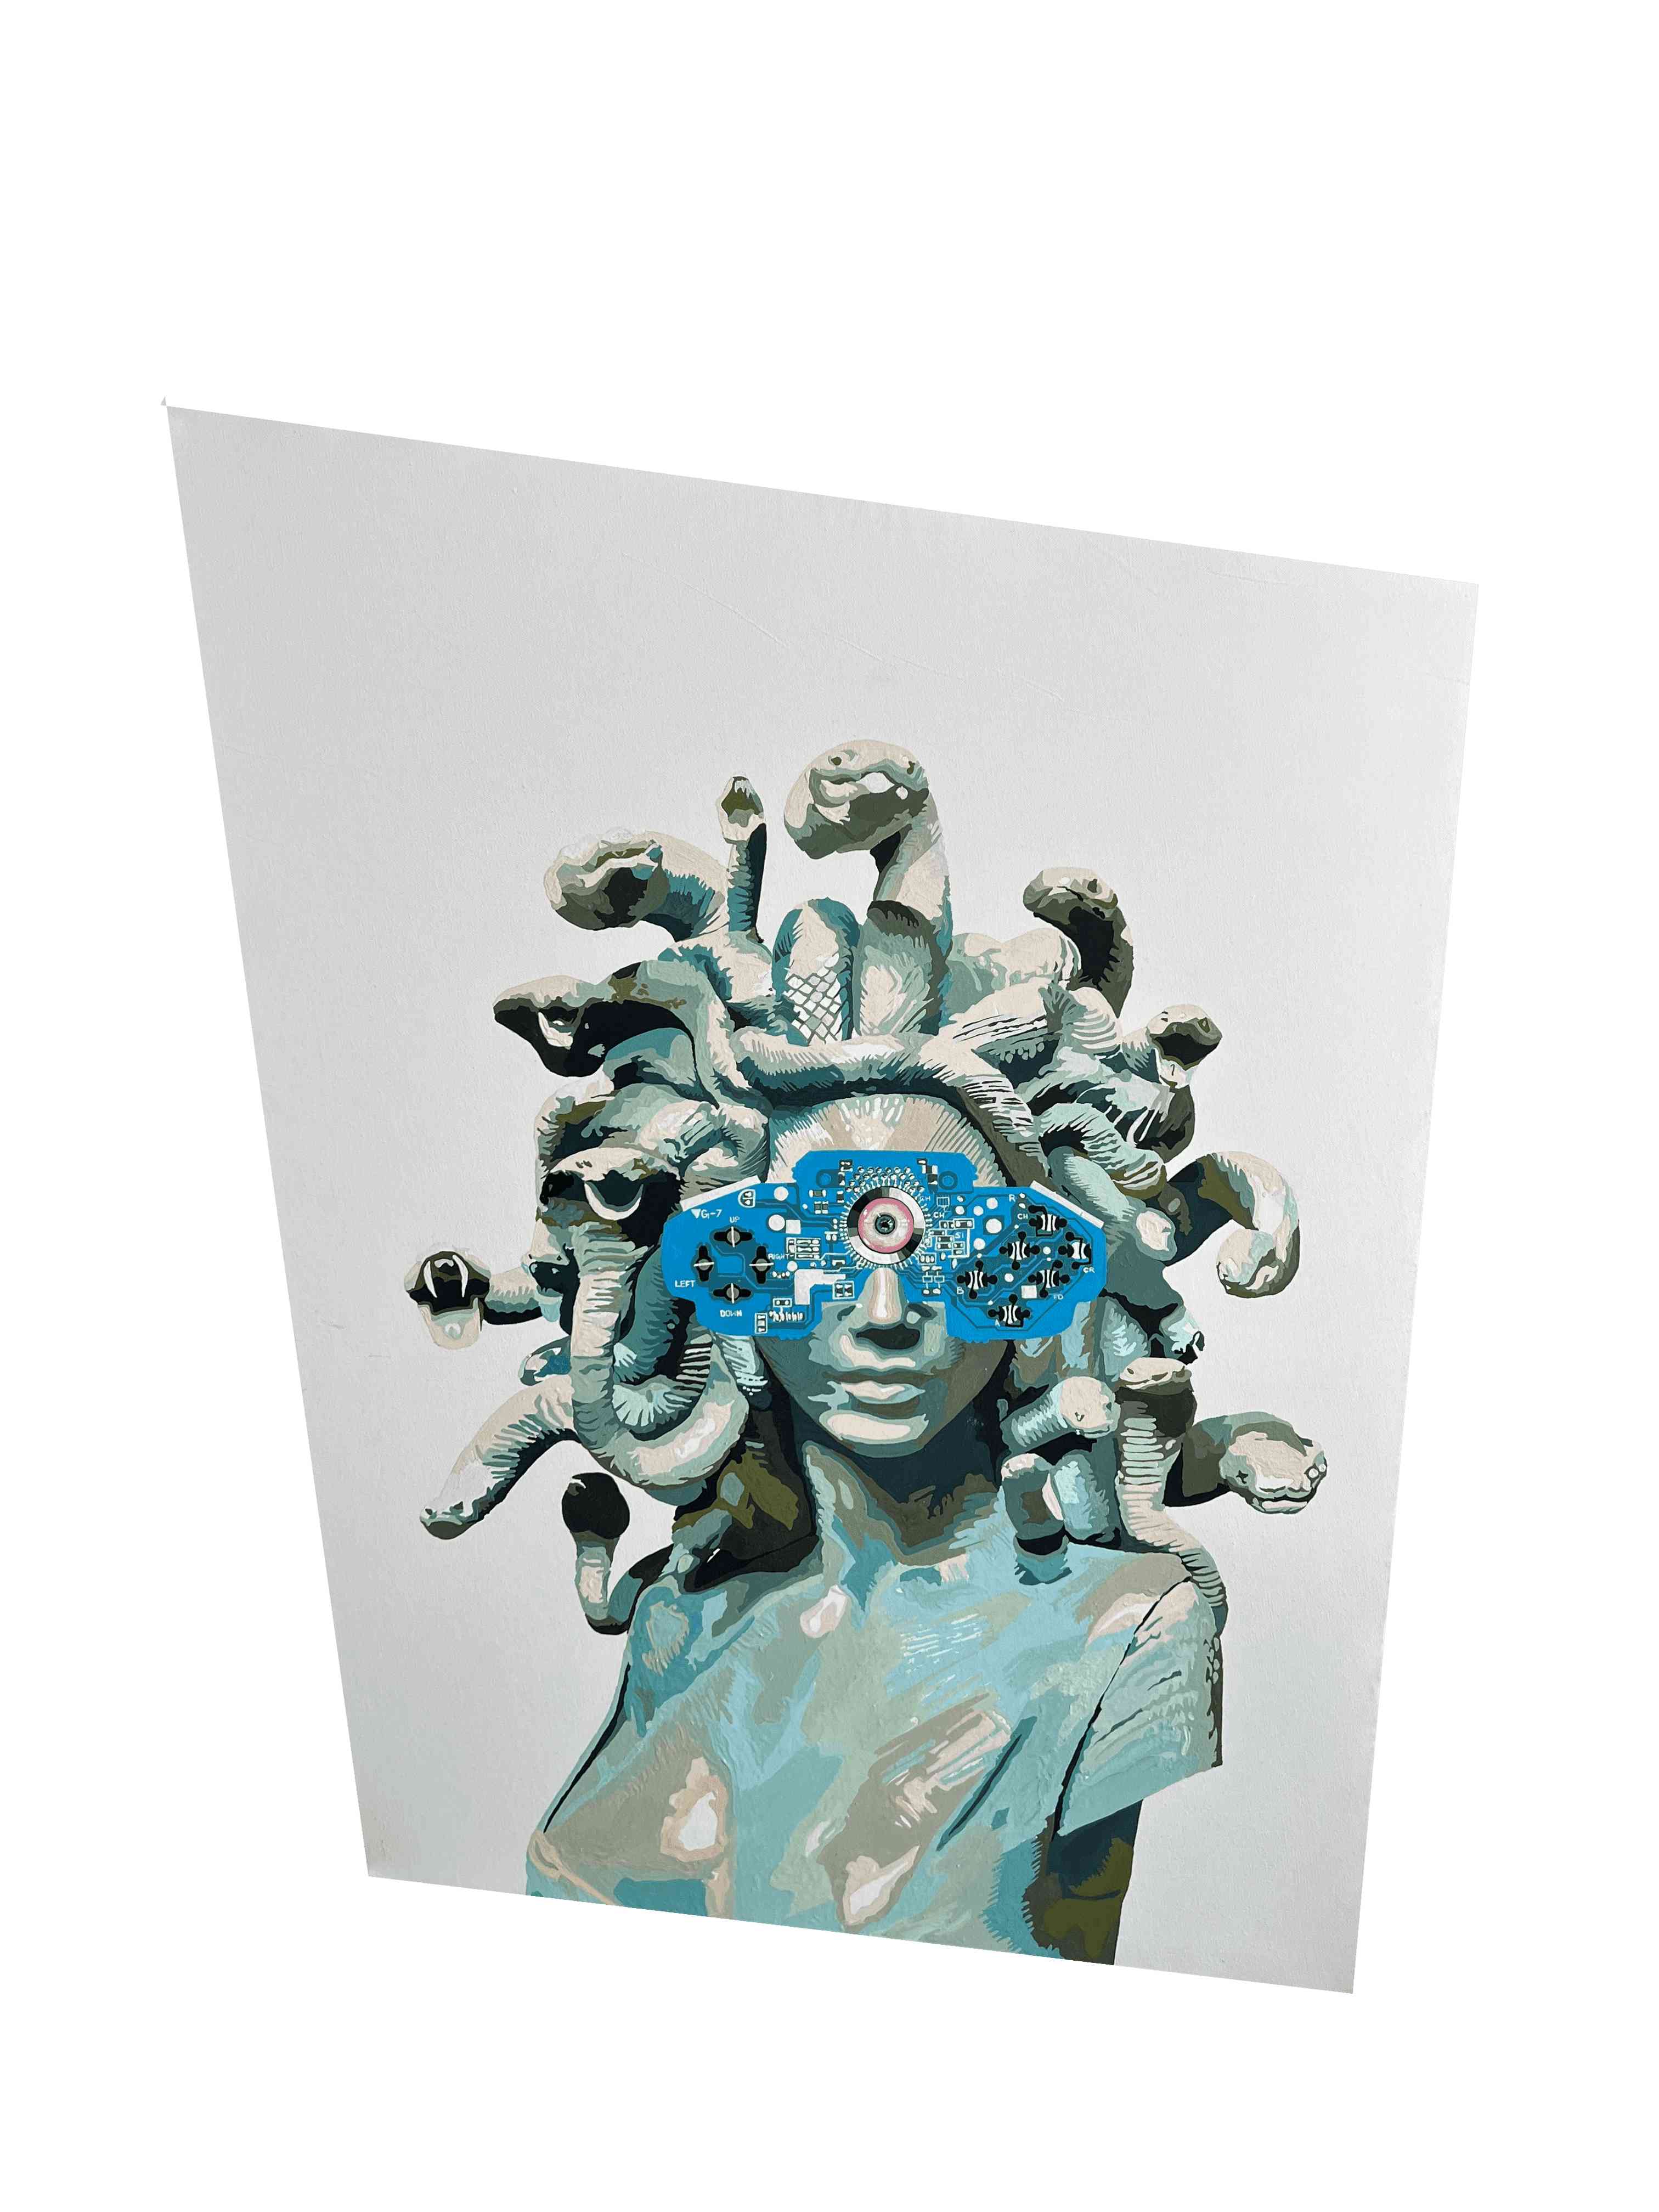 The Medusa Ghaze<br>Medium: Acrylic on Canvas with Augmented Reality<br>Size: 32x35 inch